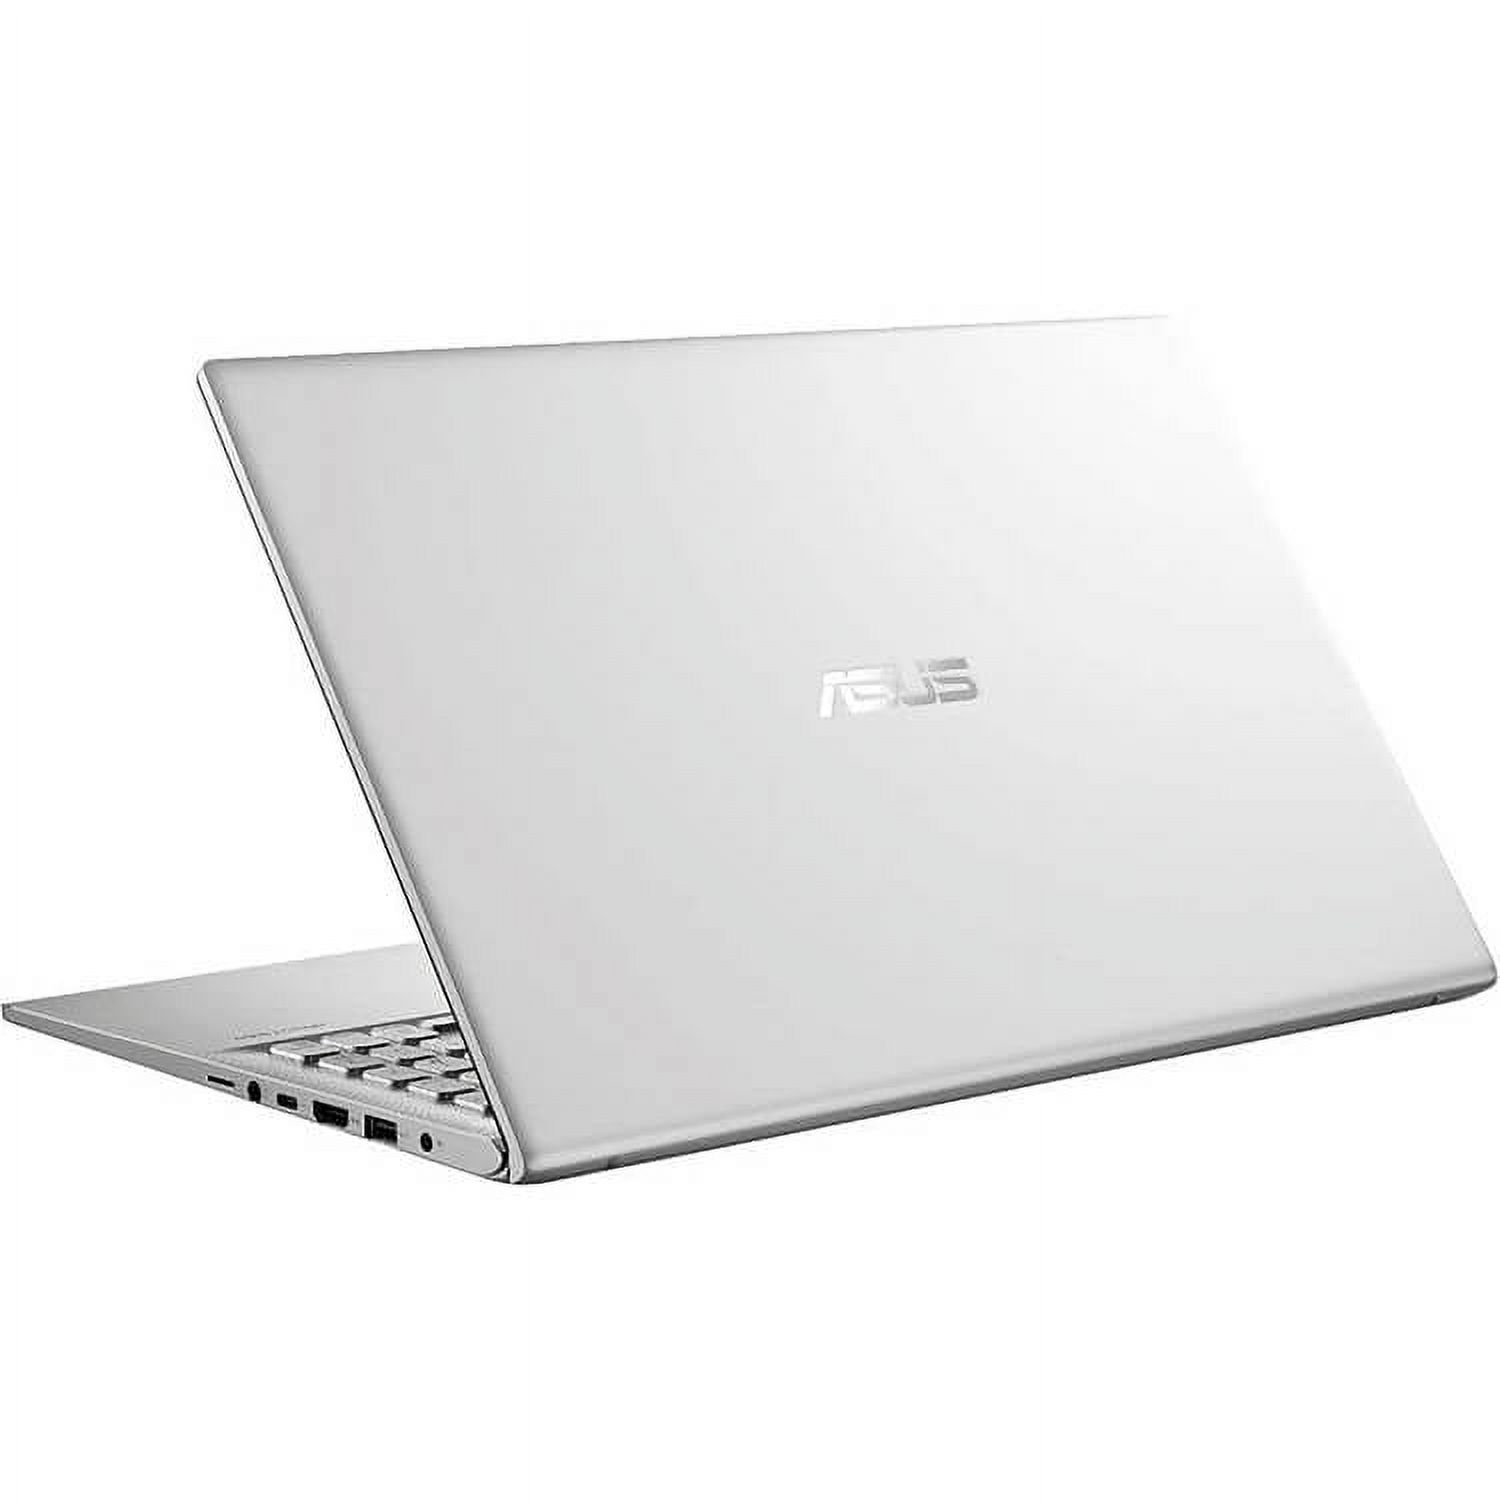 Asus VivoBook 15 15.6" 1920x1080 Laptop - AMD Ryzen 7 - 12GB Memory - AMD Radeon RX Vega 10 - 512GB SSD - Transparent Silver - image 2 of 3